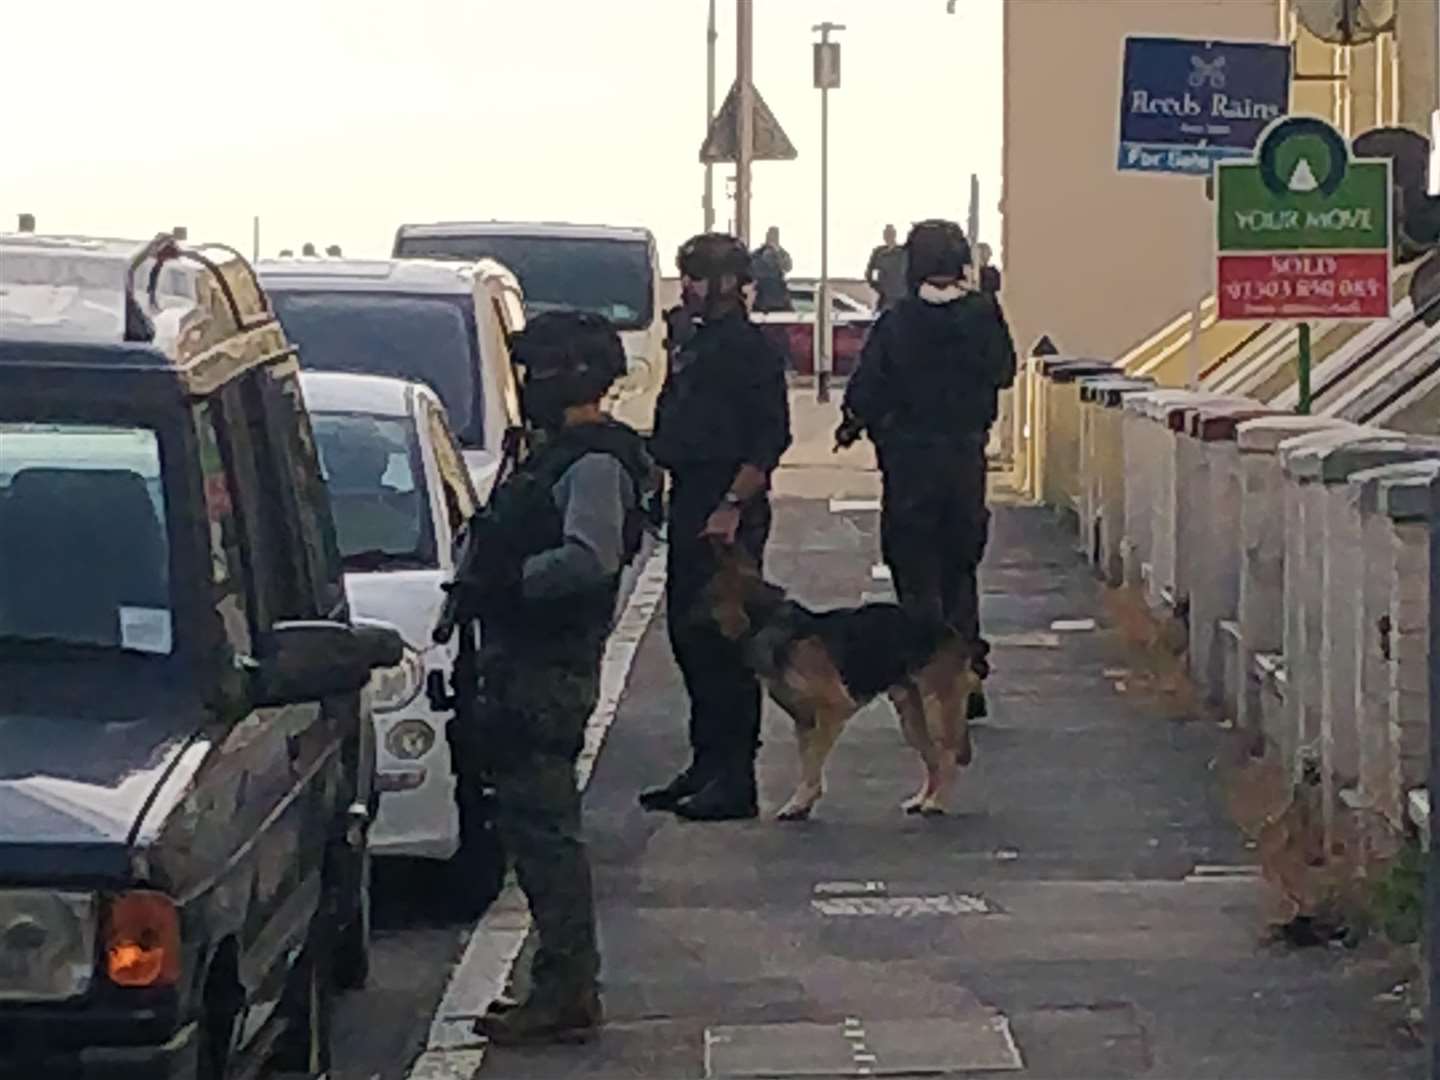 Armed police in Marine Terrace Picture: Dan Desborough (4916320)